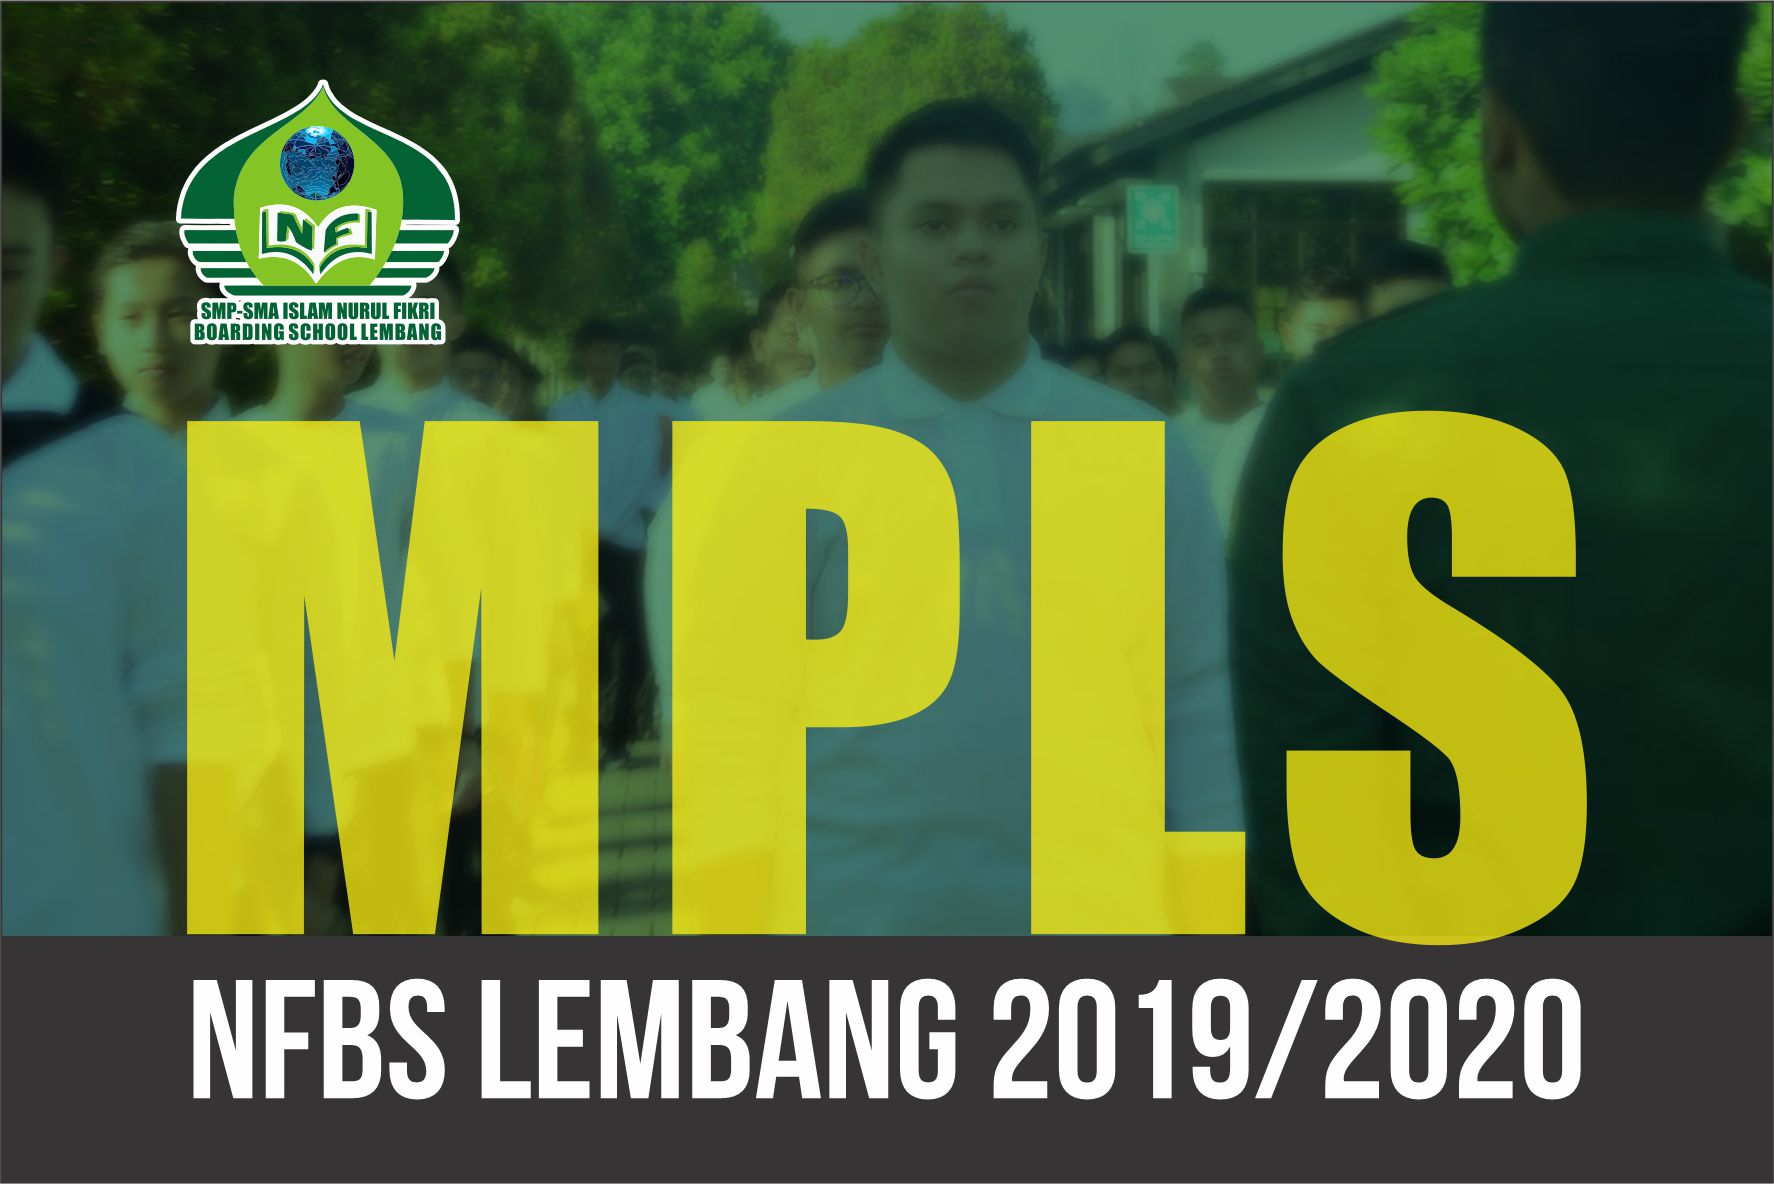 MASA PENGENALAN LINGKUNGAN SEKOLAH NFBS LEMBANG TP 2019/2020